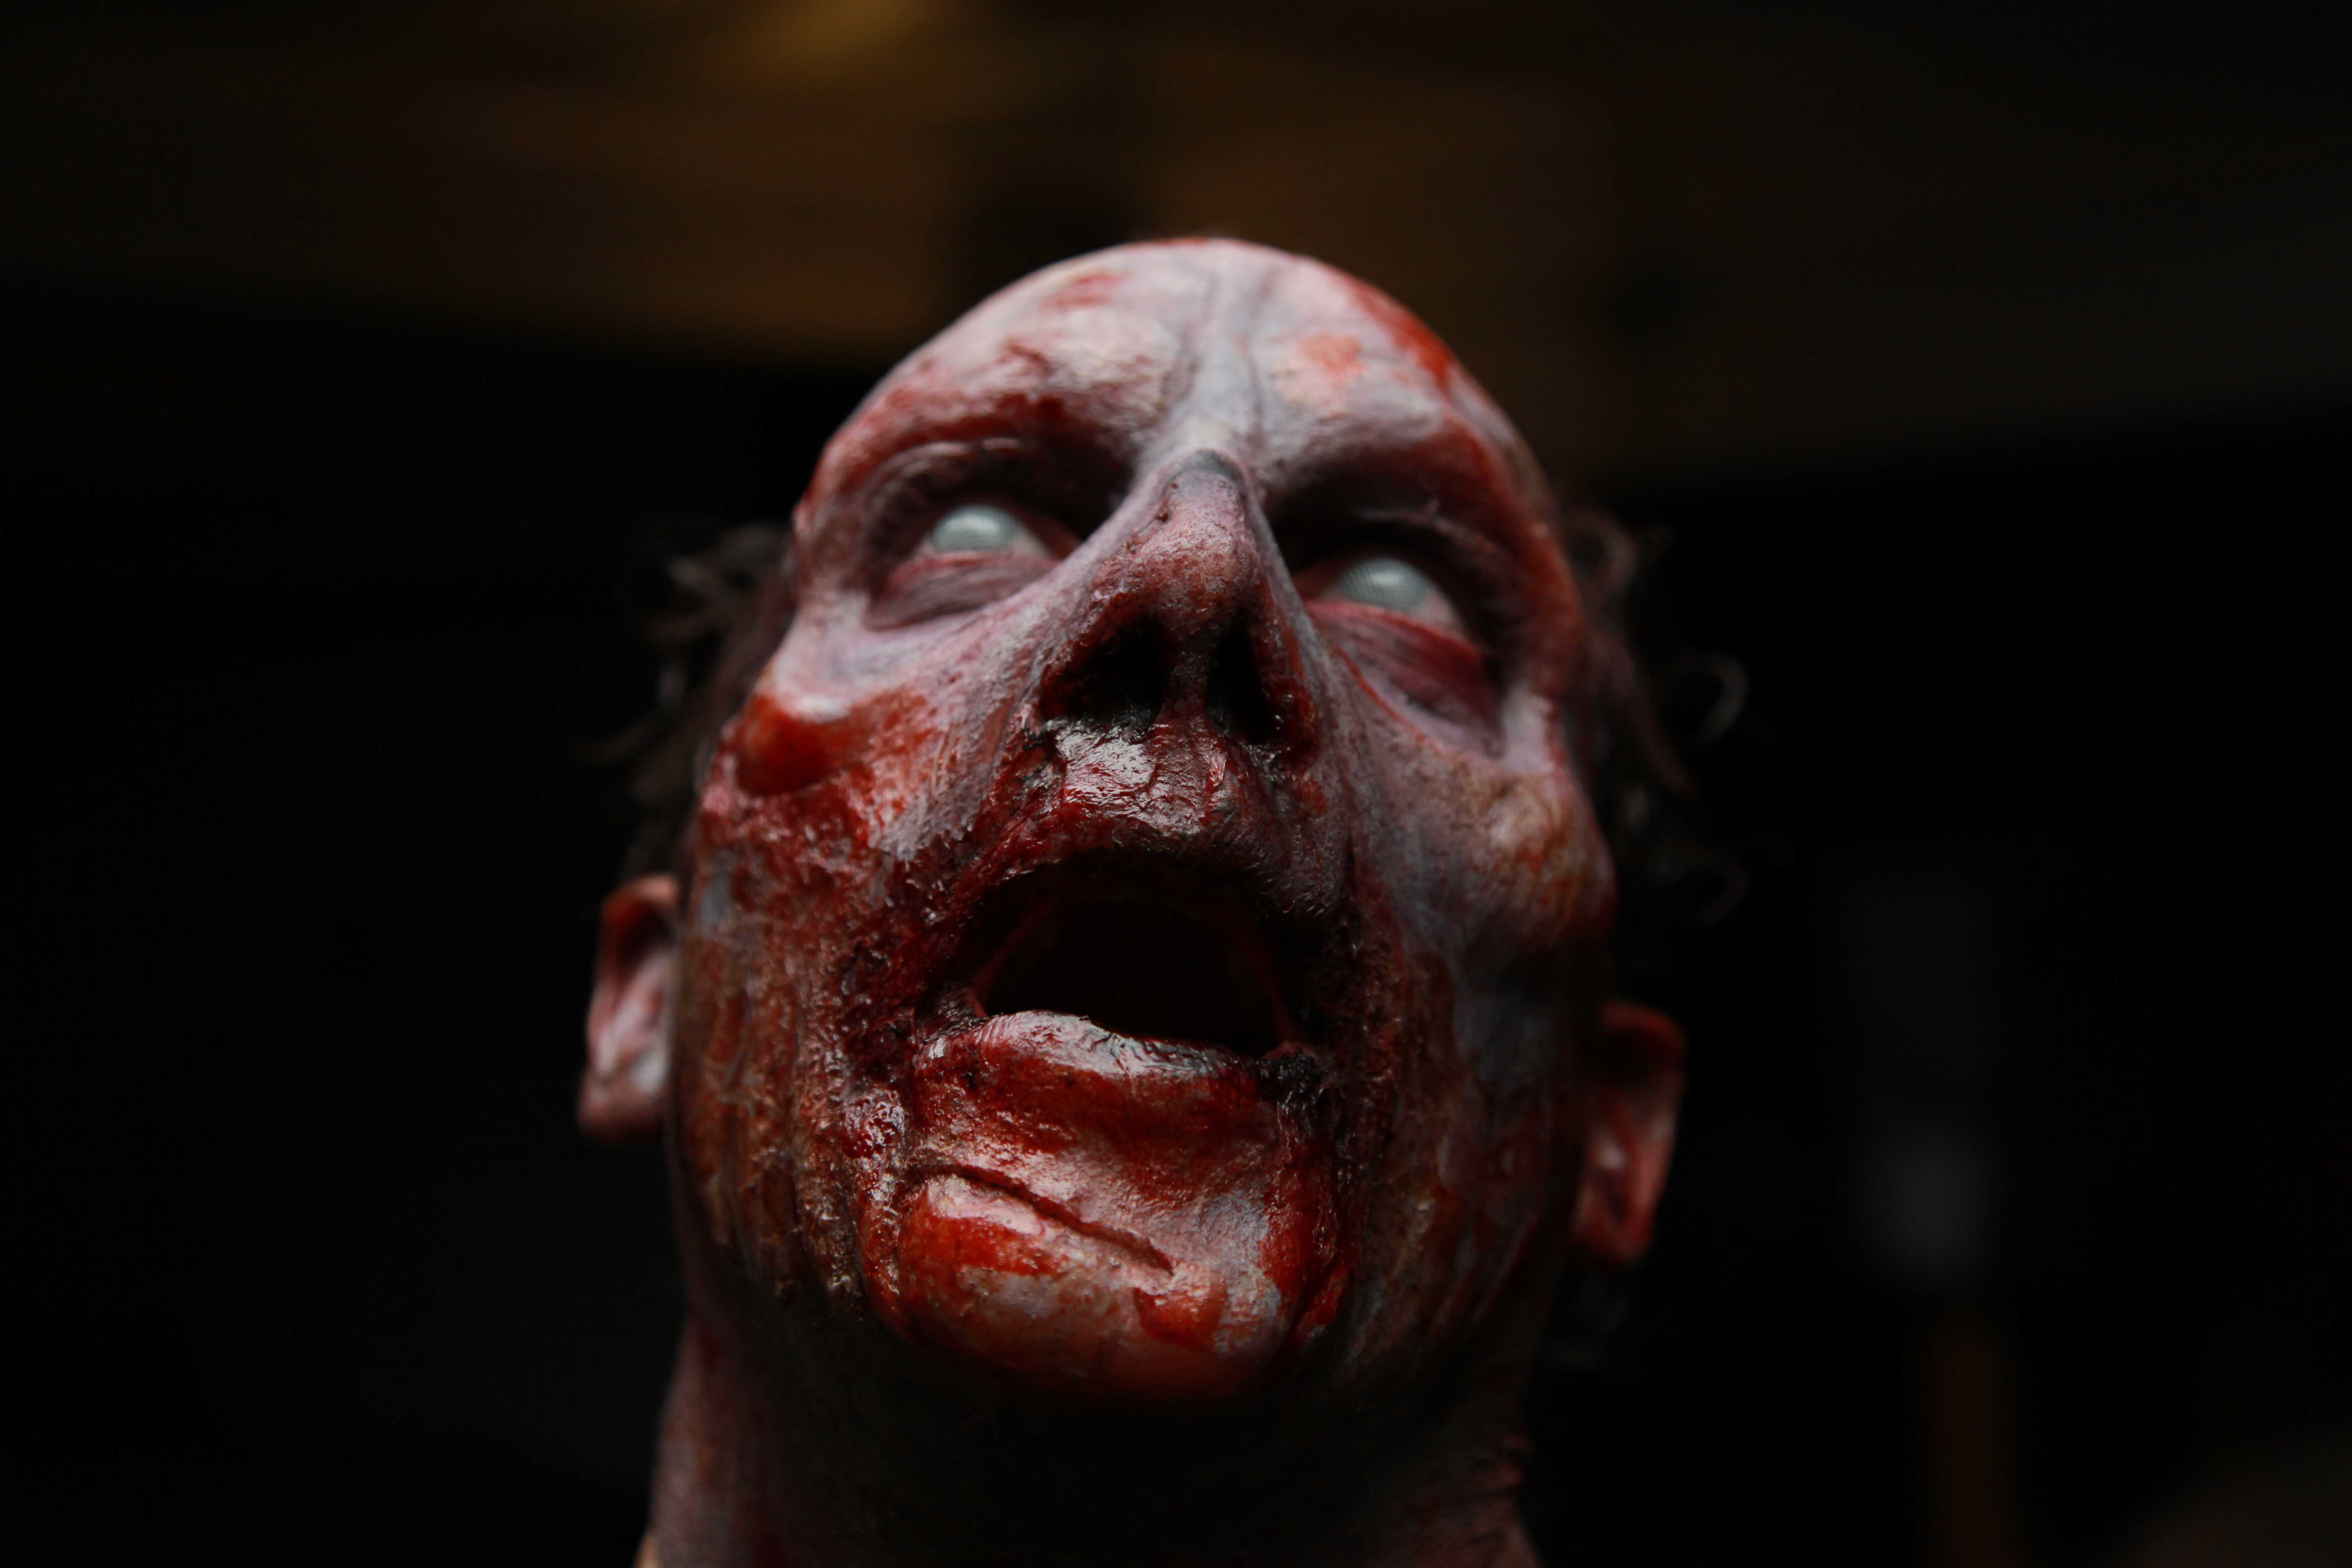 Zombie - Make up by Dan Gilbert